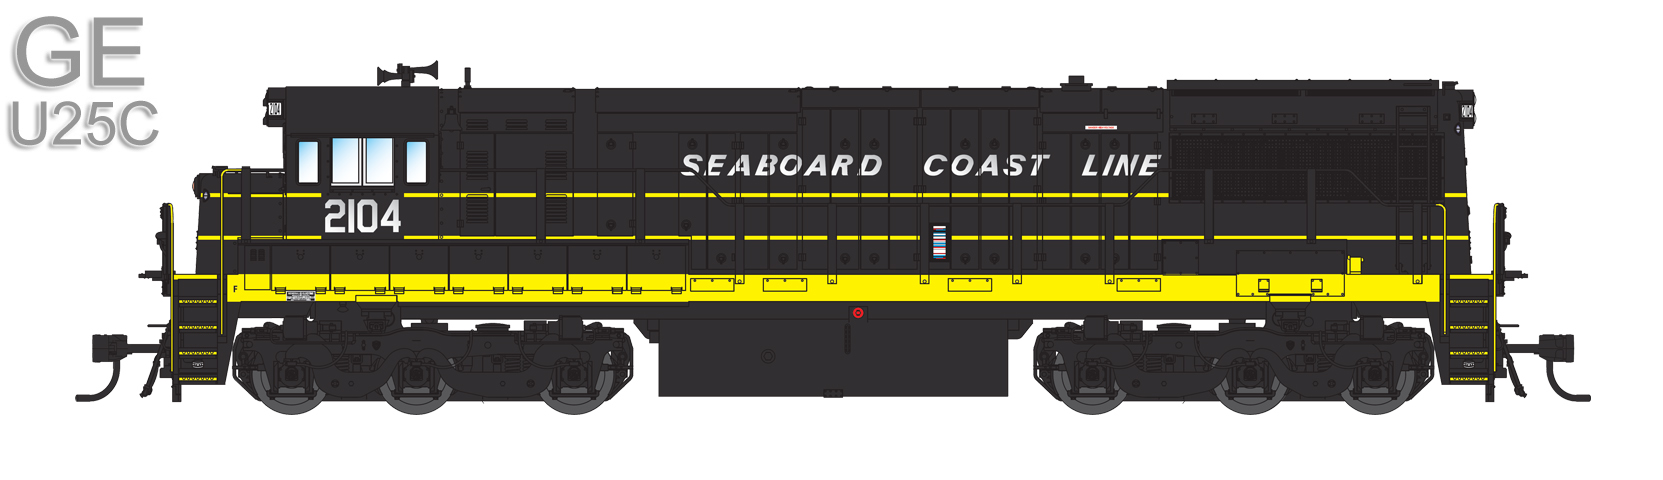 Seaboard Coast Line (Coming Soon): 2104, 2109